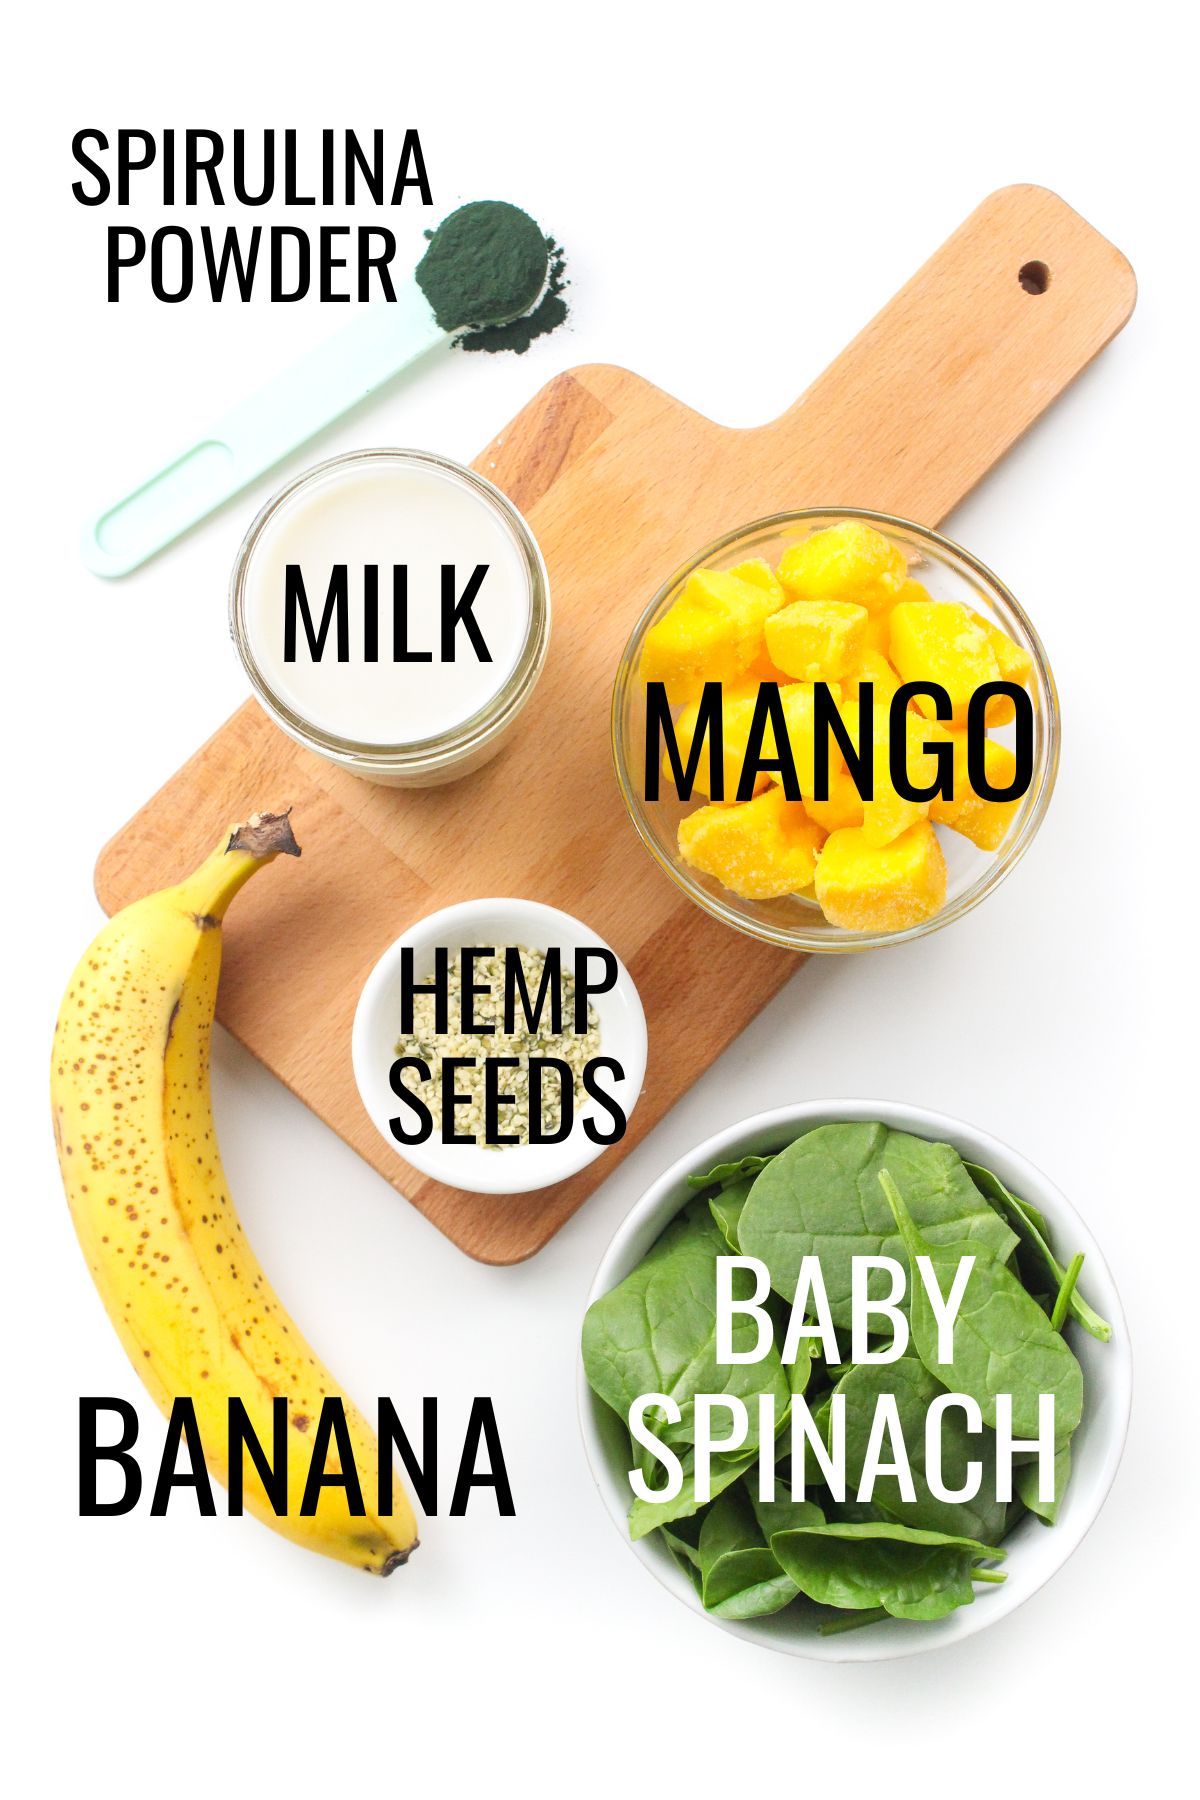 banana, spinach, mango, spirulina powder, hemp seeds, and milk in small bowls on a wooden board